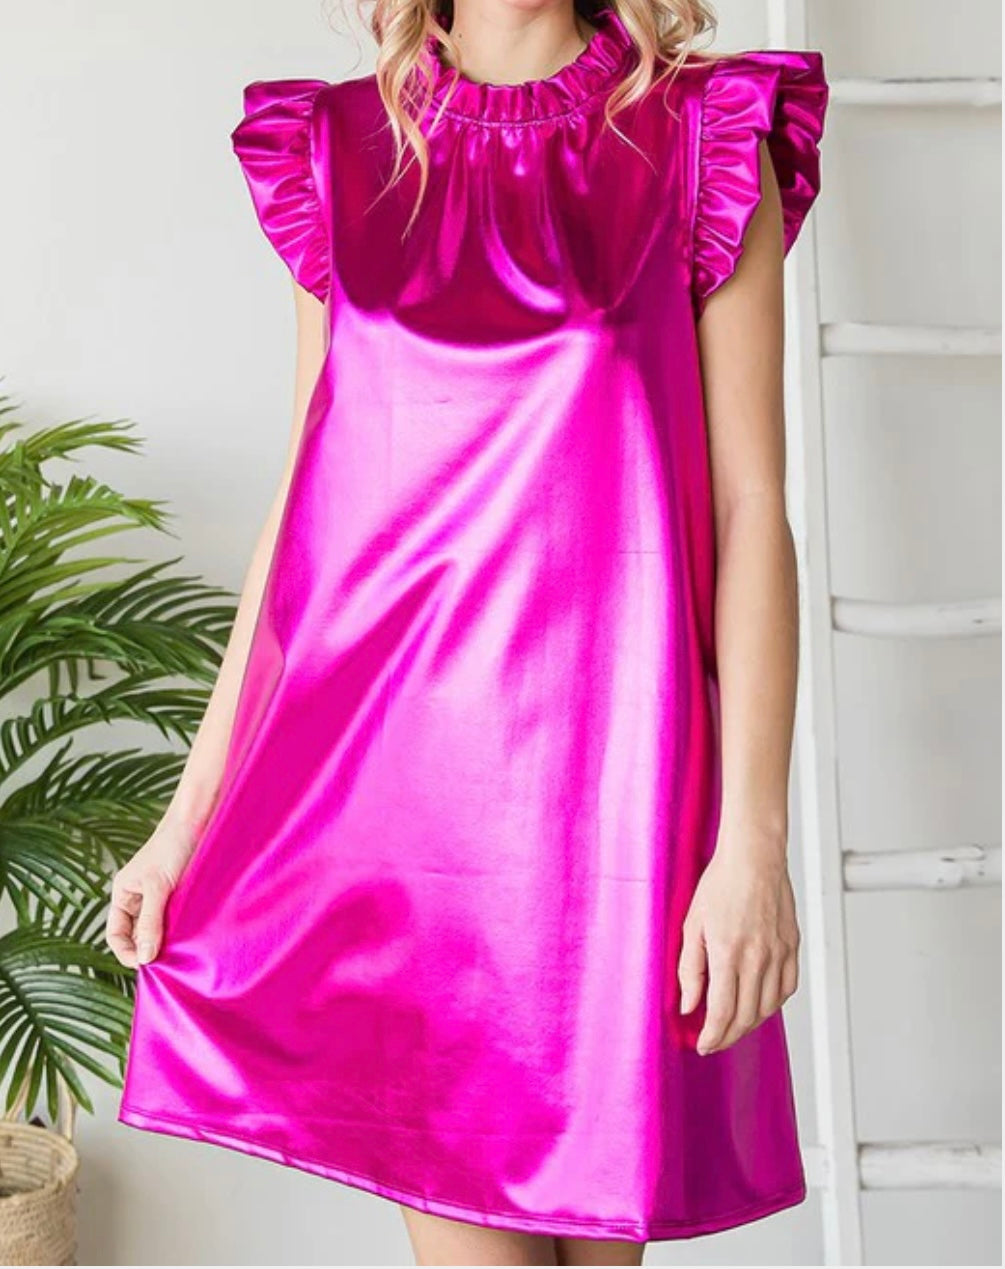 Metallic Pleather Dress - Pink